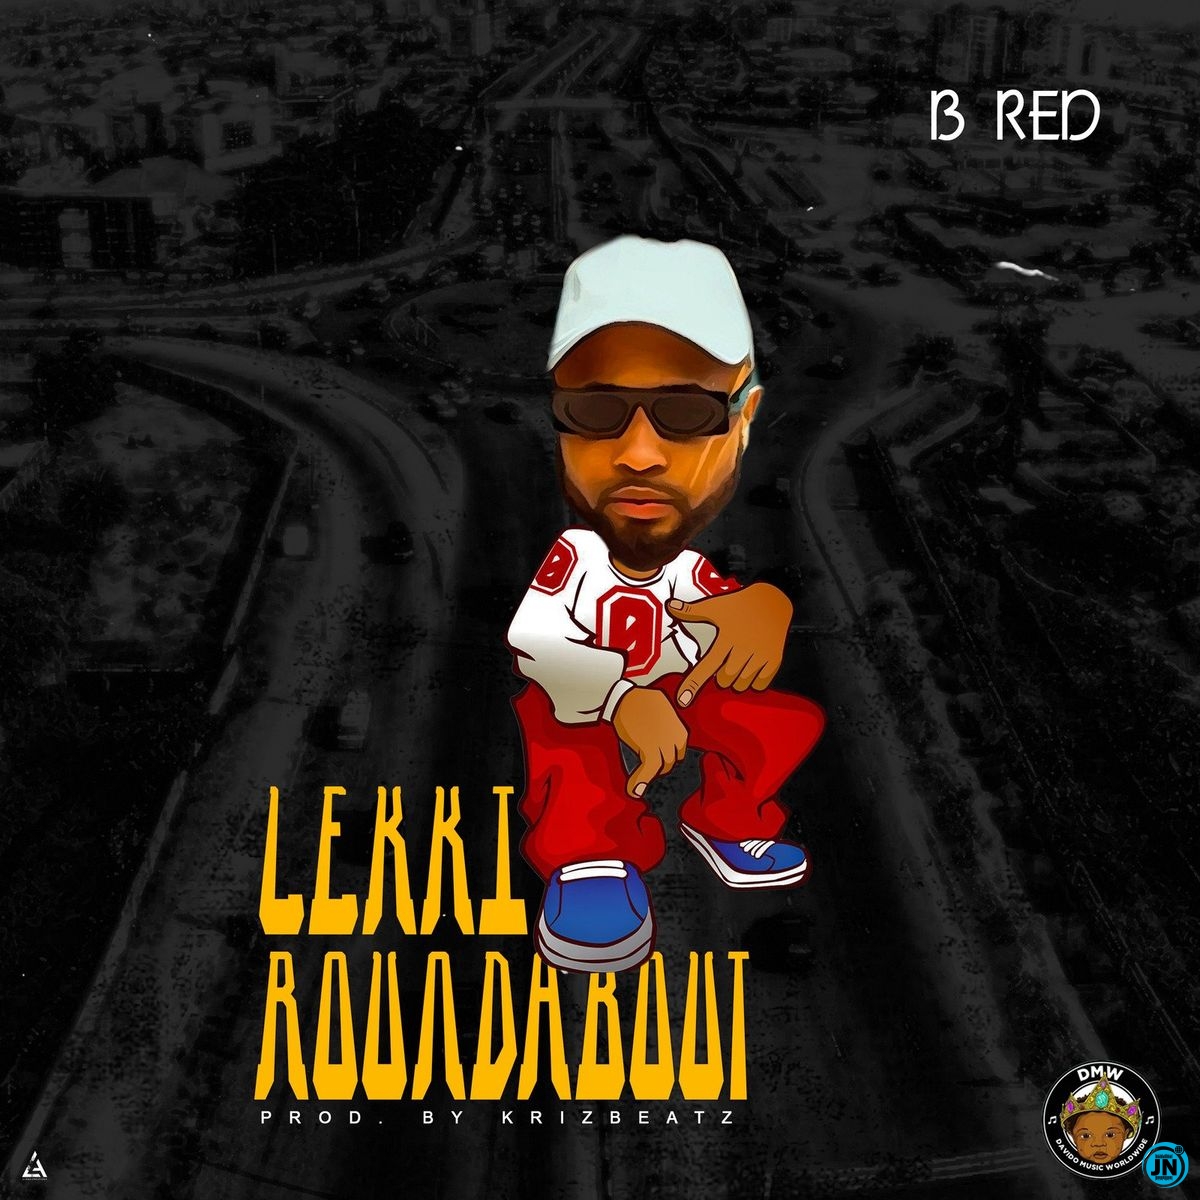 B-Red - Lekki Roundabout   Mp3 Download lyrics